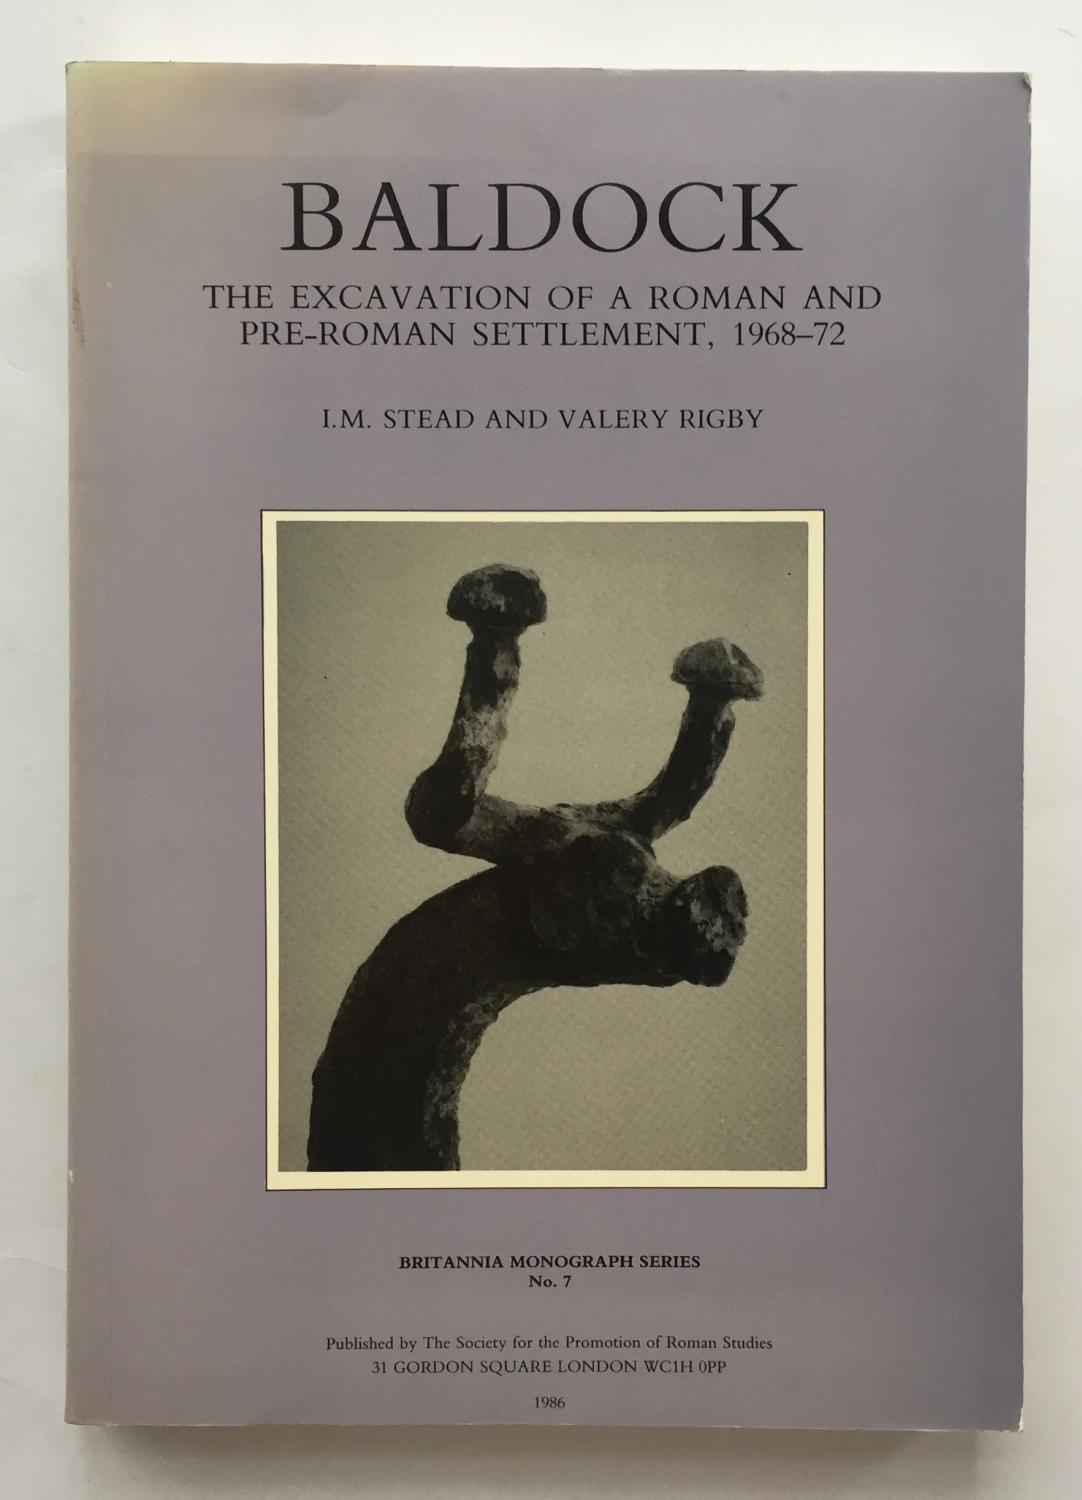 Baldock: The Excavation of a Roman and pre-Roman Settlement, 1968-72 (Britannia Monographs)